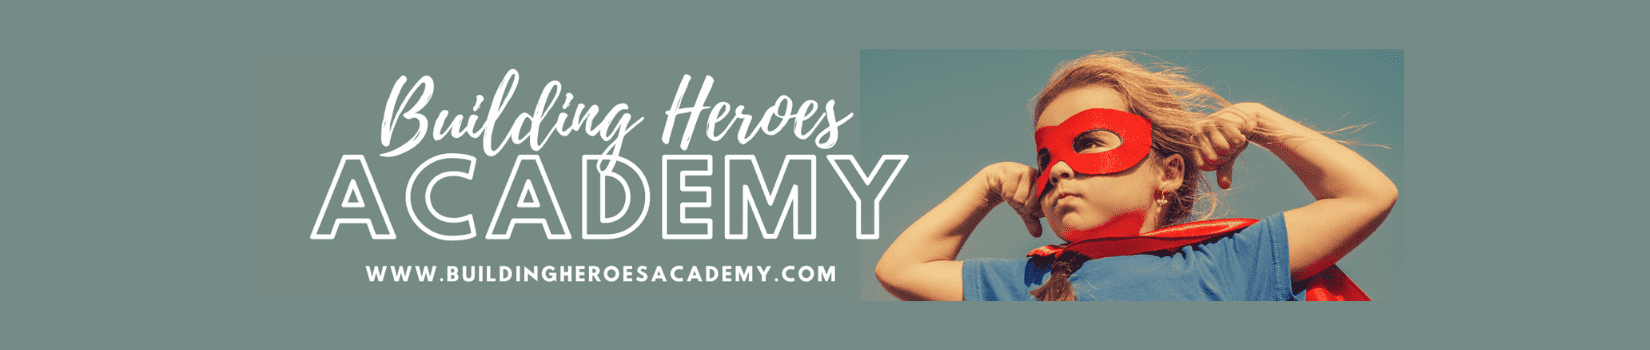 Building Heroes Academy